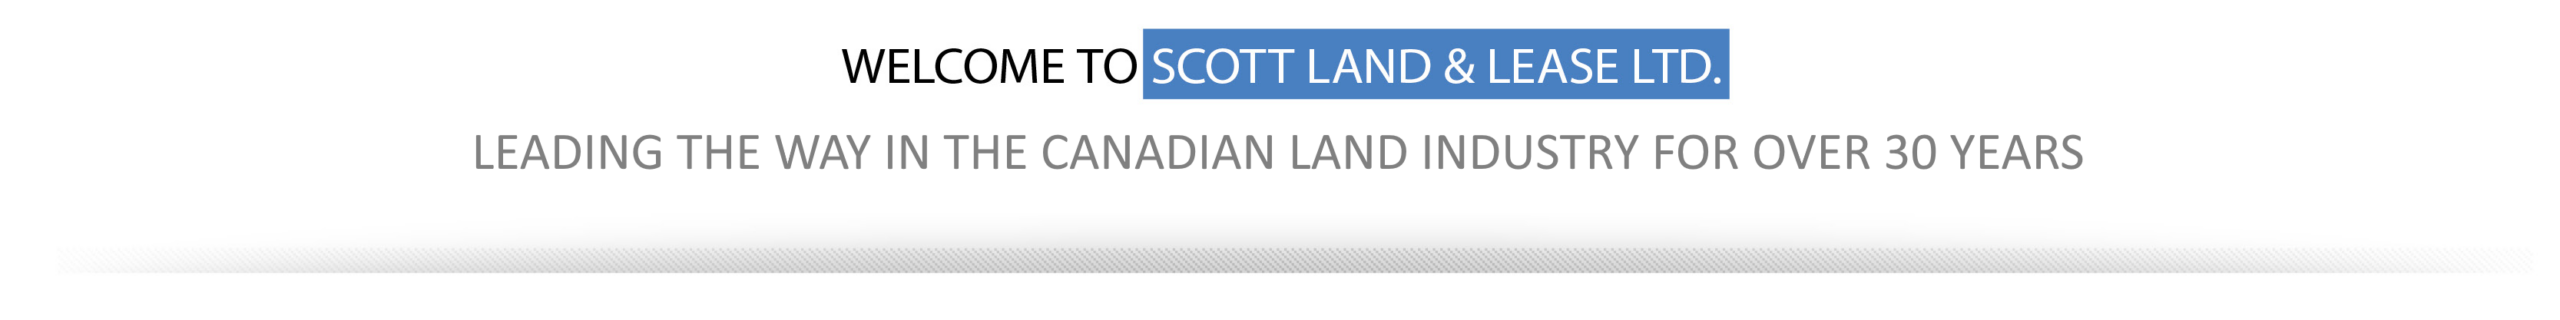 Scott Land & Lease LTD - Top Western Canadian Land Service Company